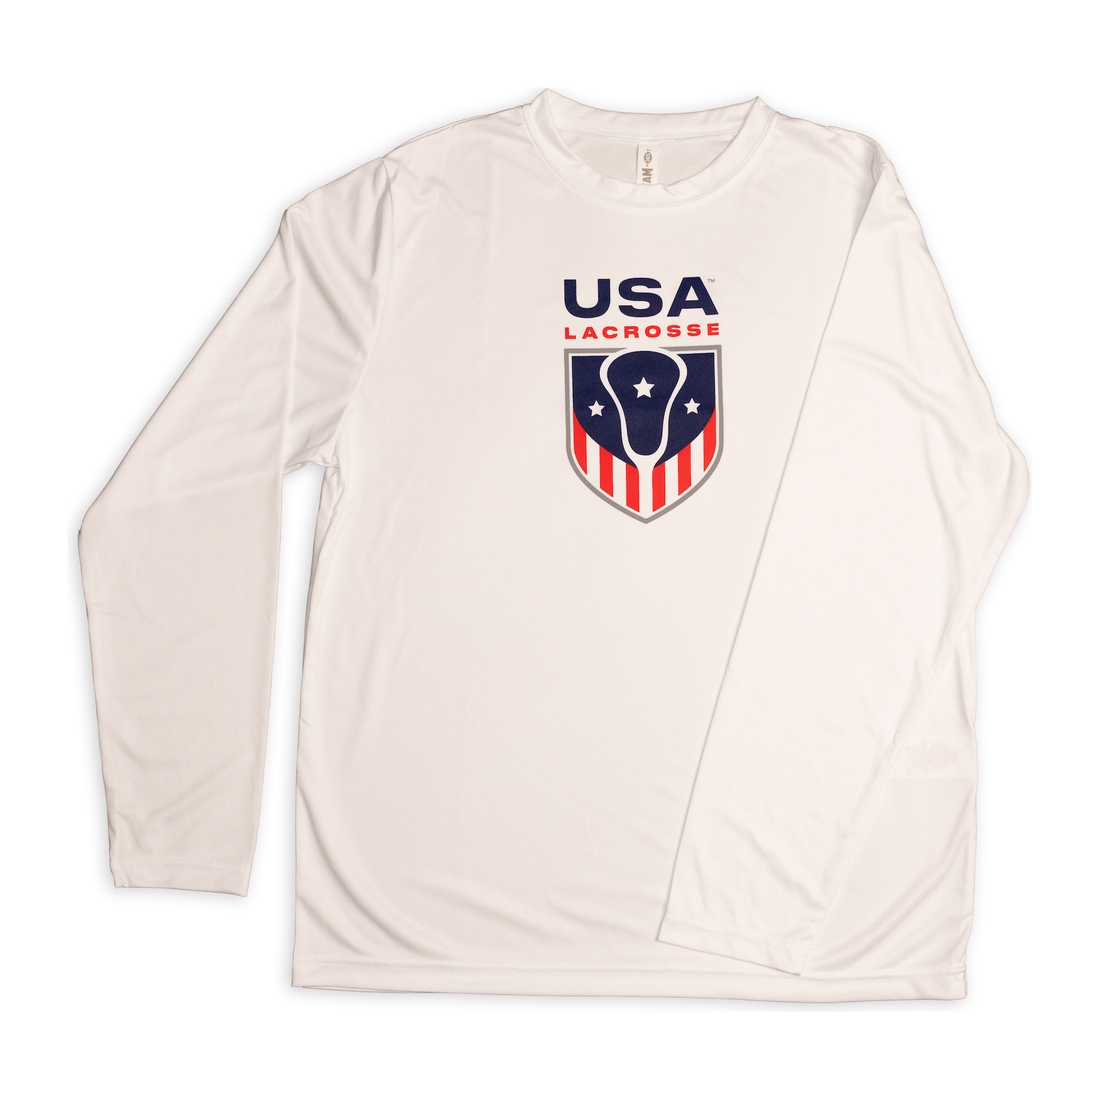 Final Sale: Adult's USA Lacrosse Cotton 365 Long Sleeve*